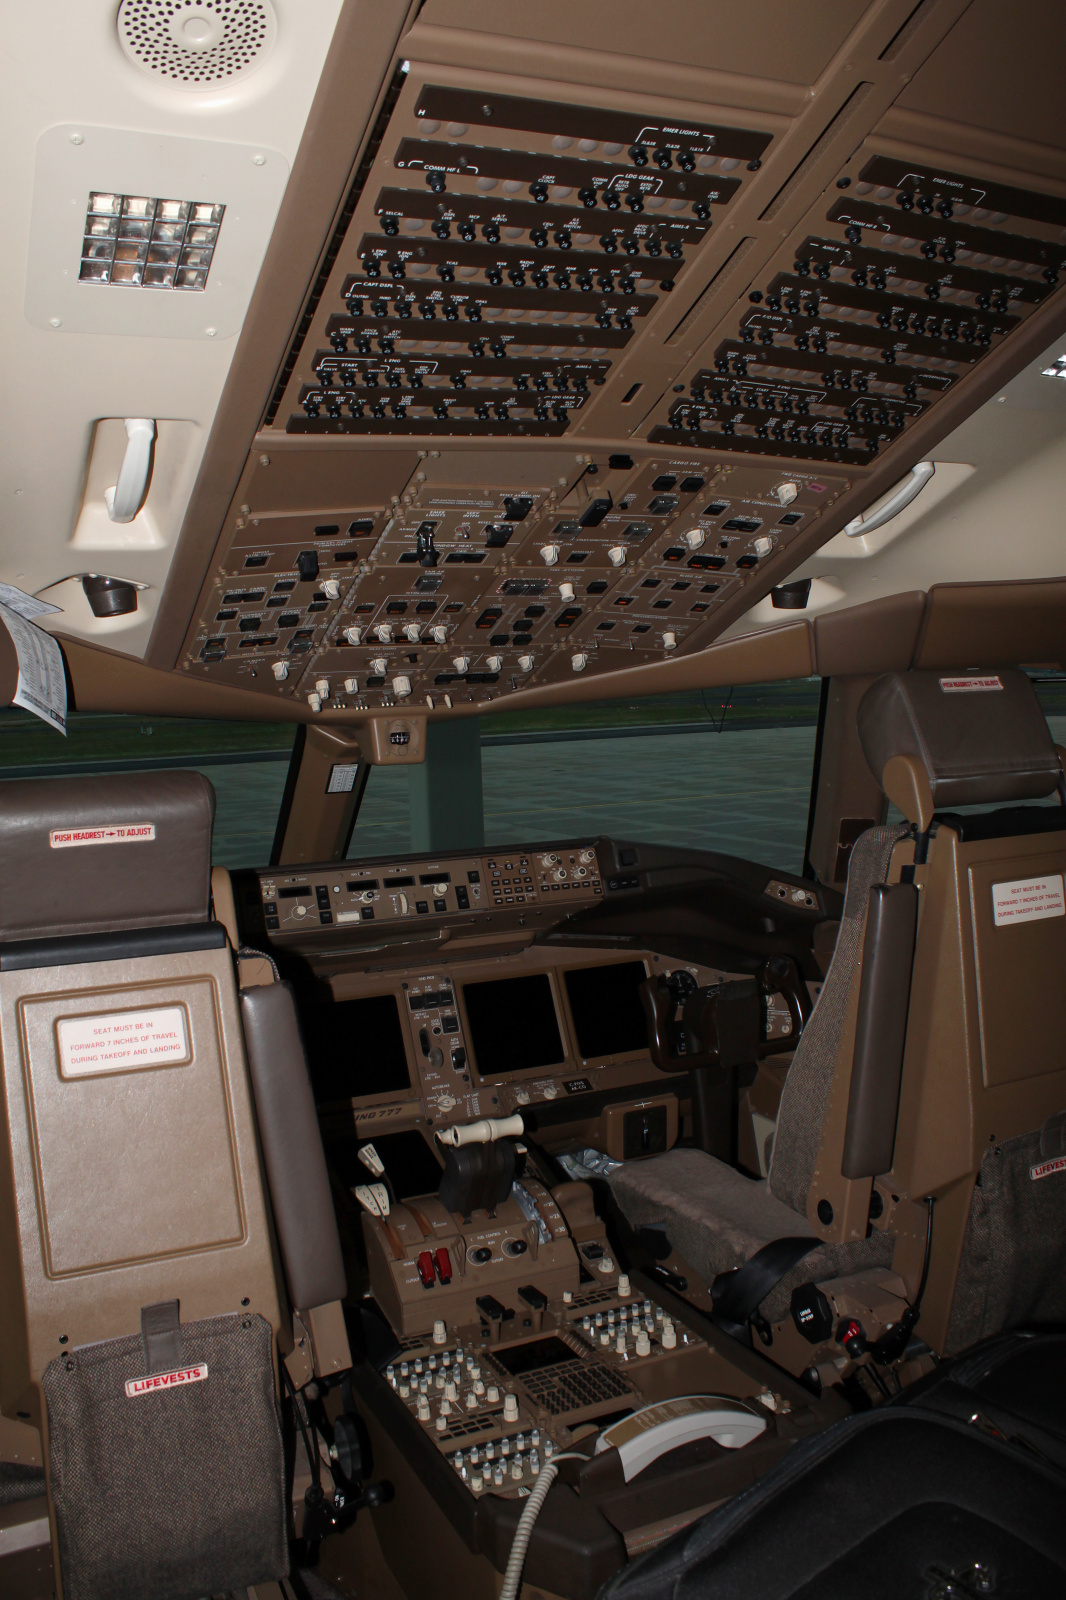 Boeing 777-300ER, C-FIVS, Air Canada - cockpit (Travels » US Trip 3: The Roads Not Taken » Aircraft)